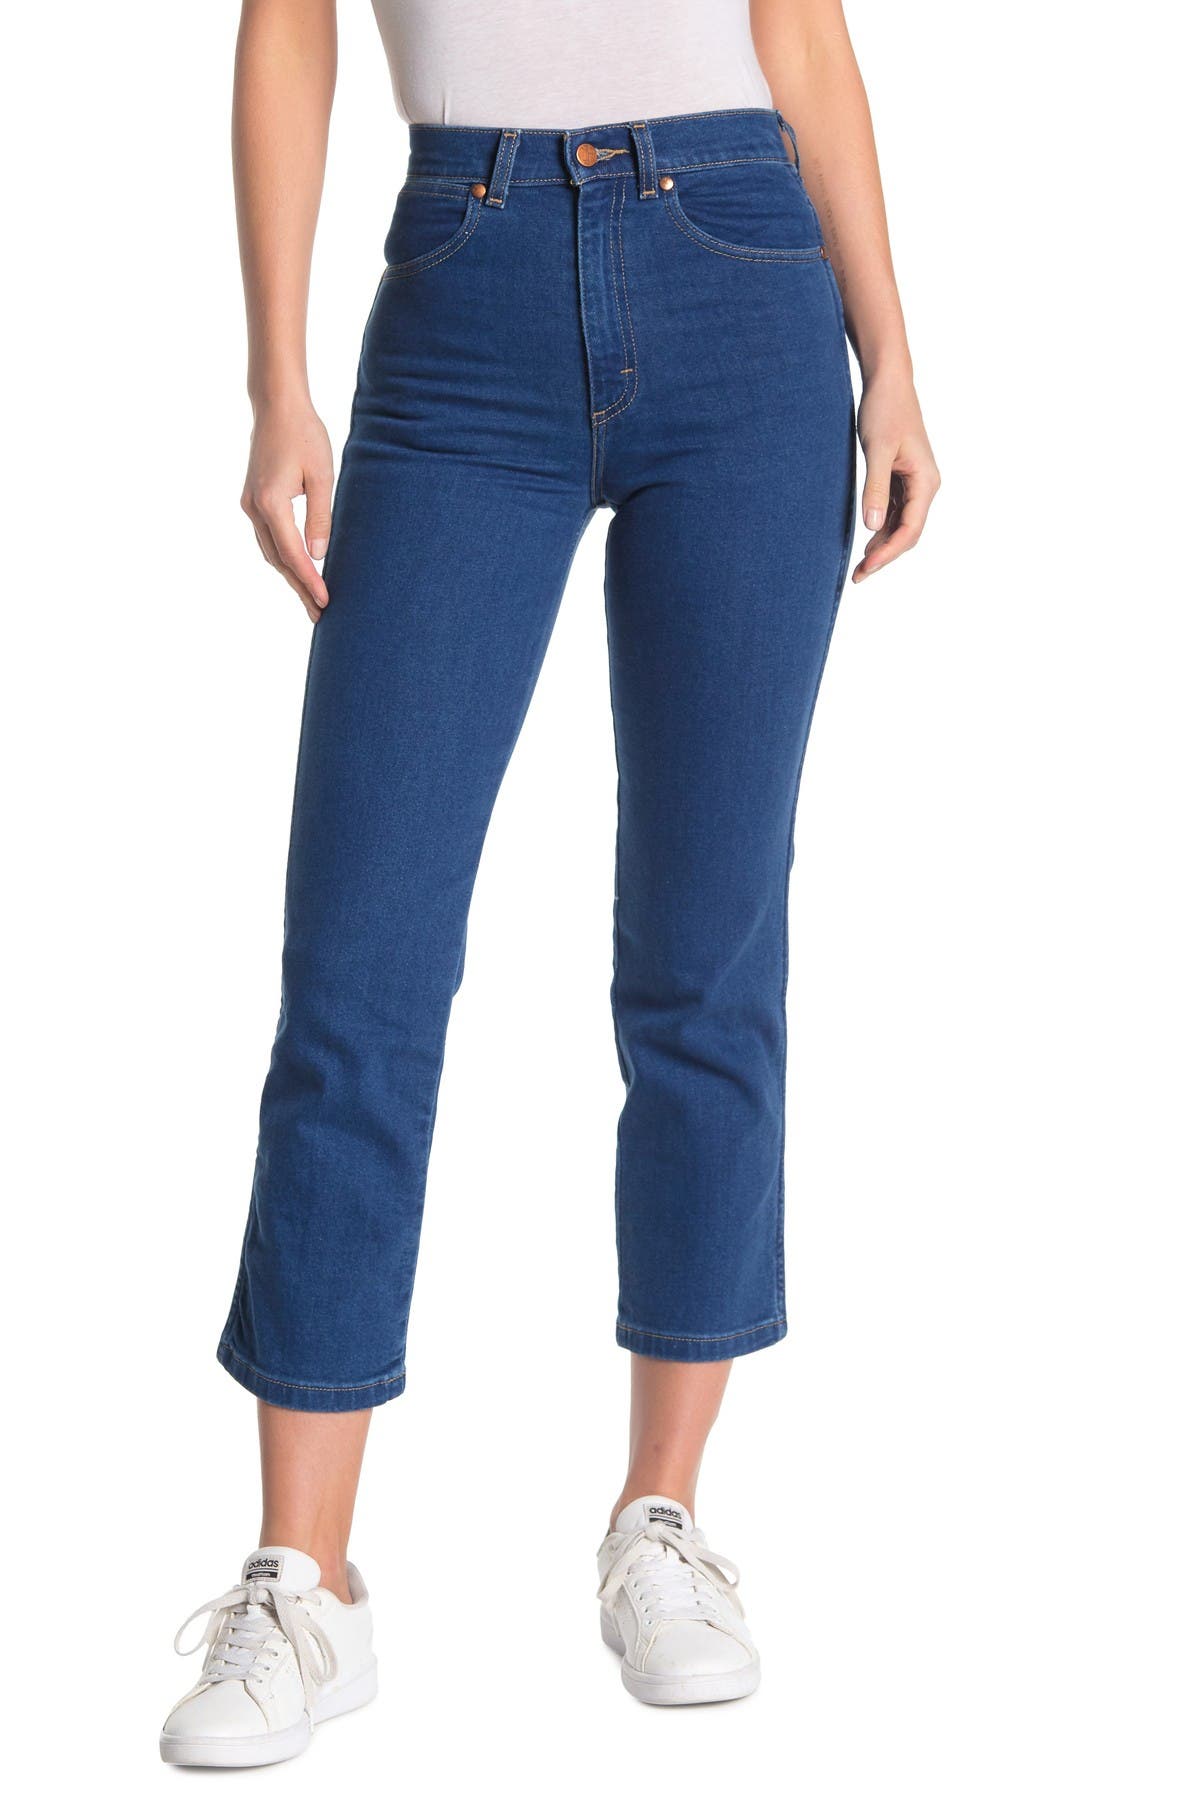 wrangler jeans 32x28